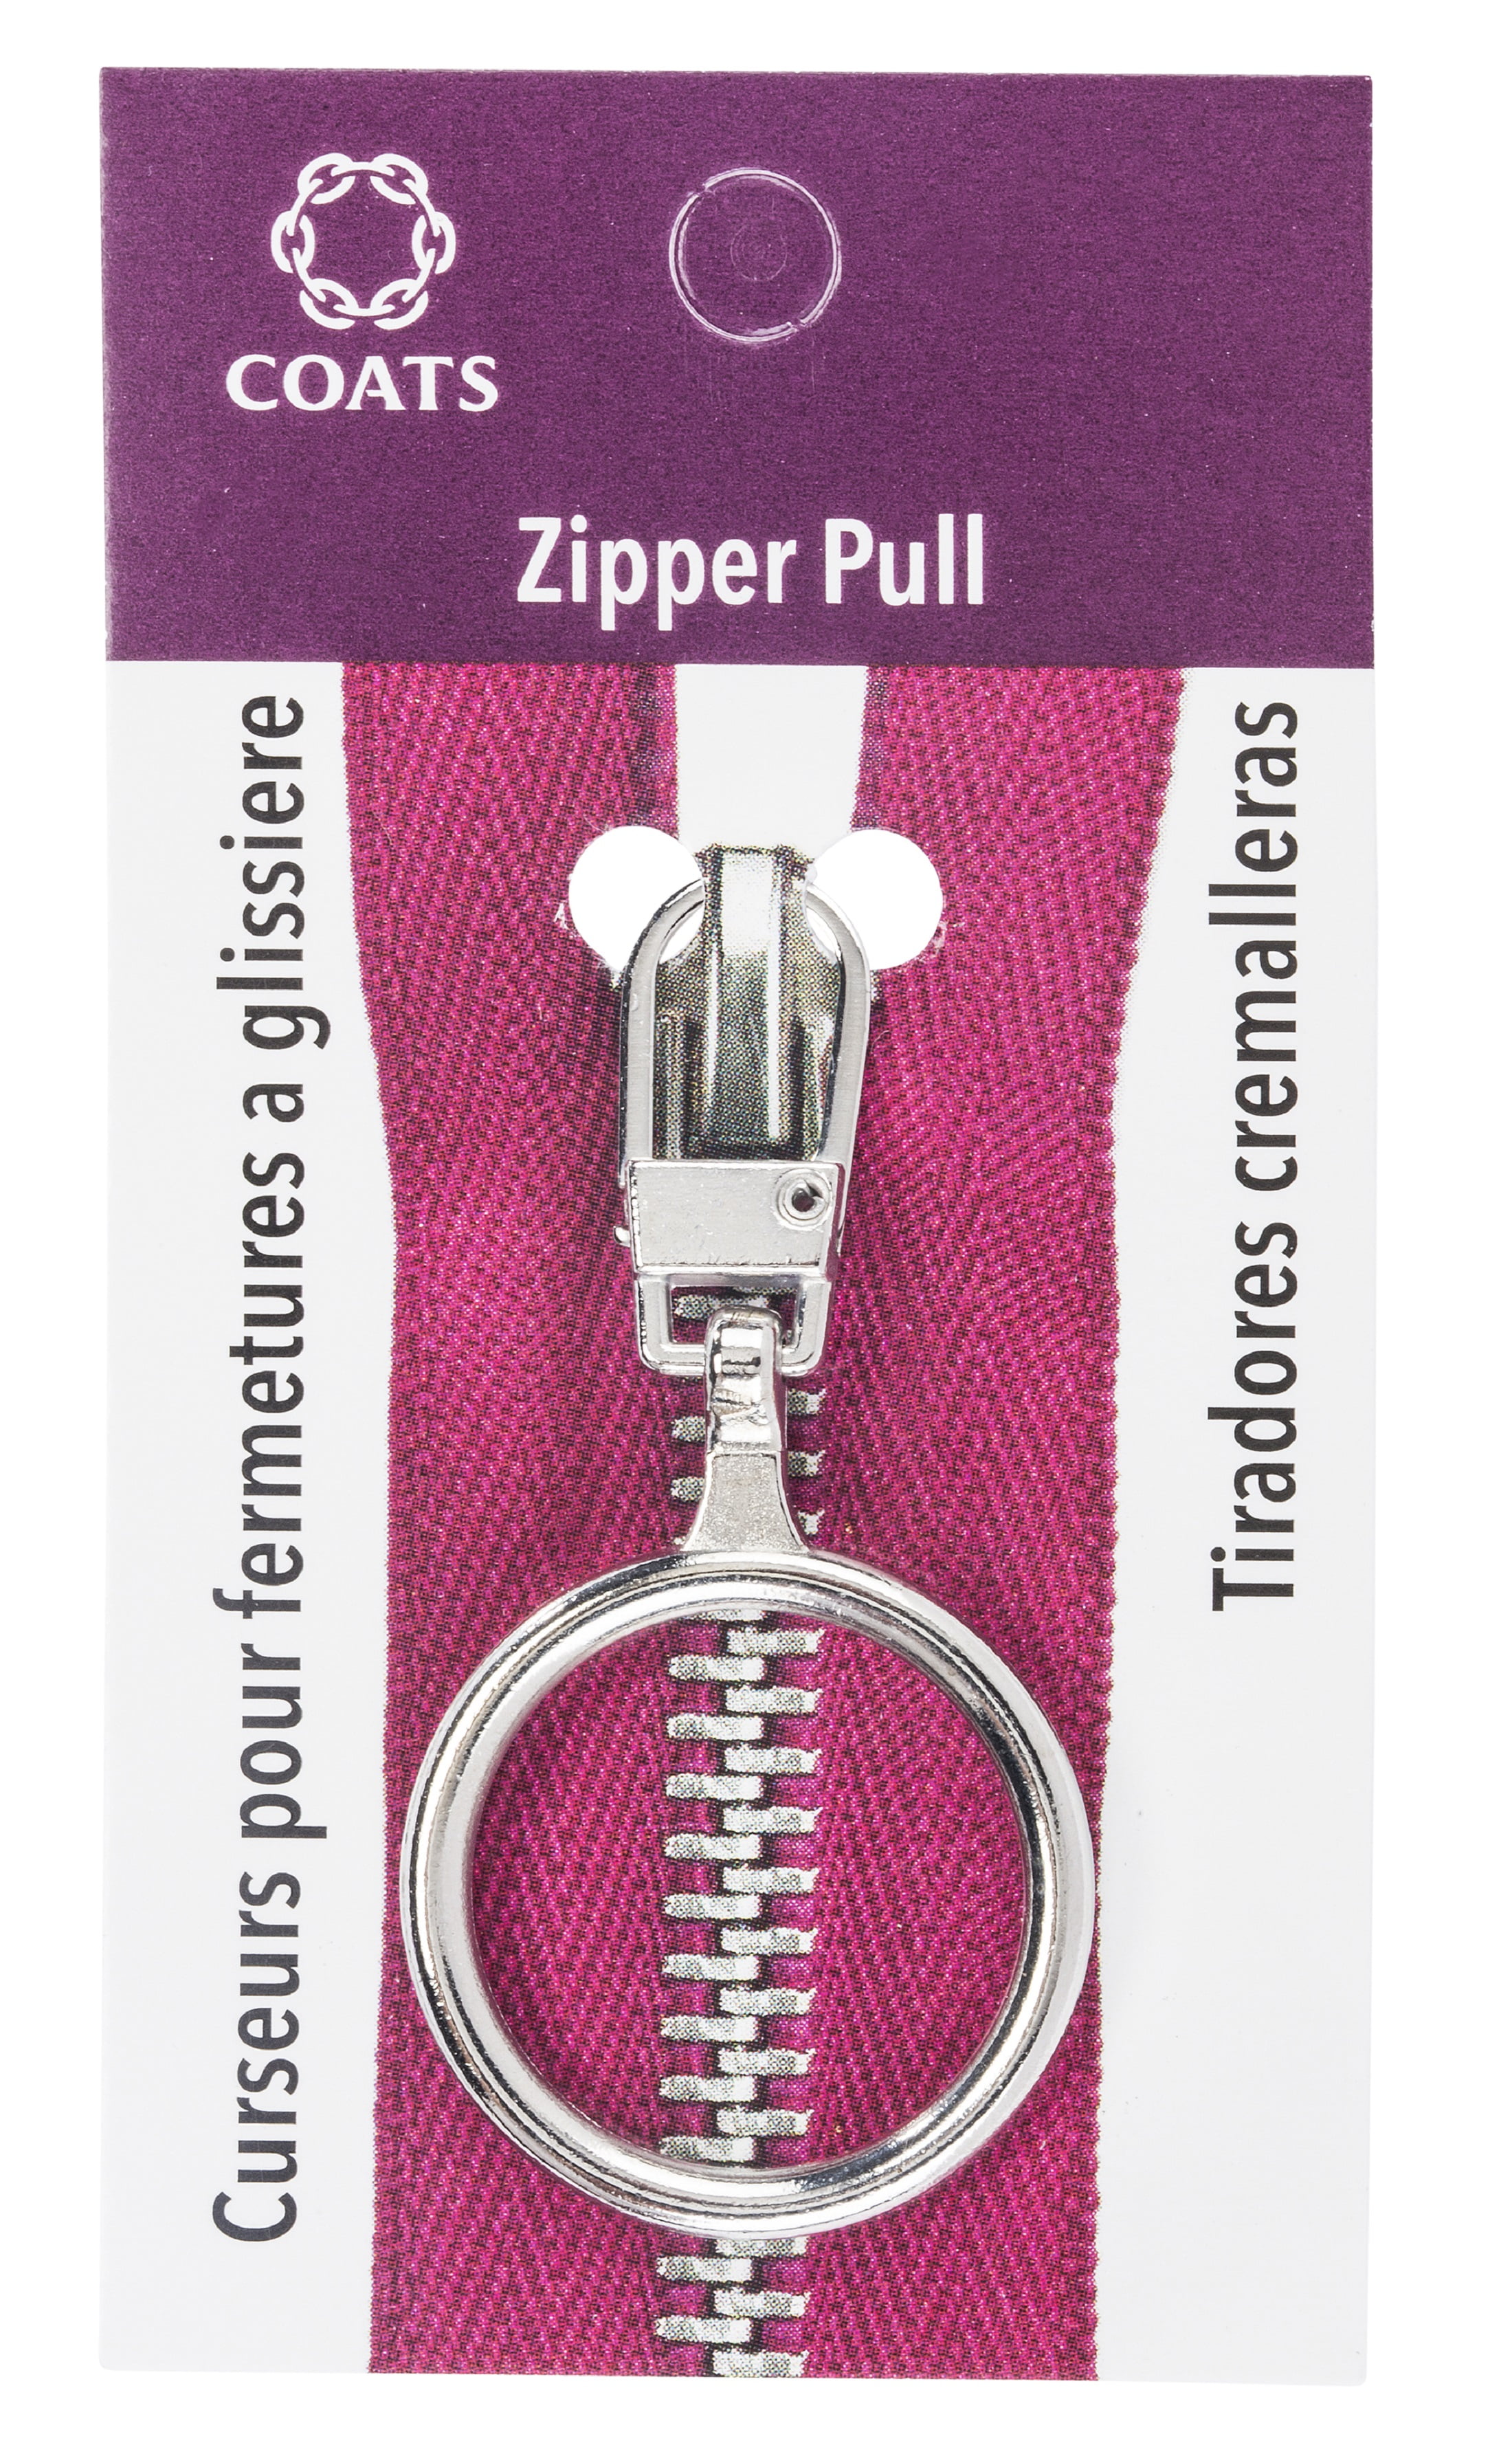 18pcs Zipper Slider Replacement Kit Zipper Repair Kit for Jackets Bags Coats